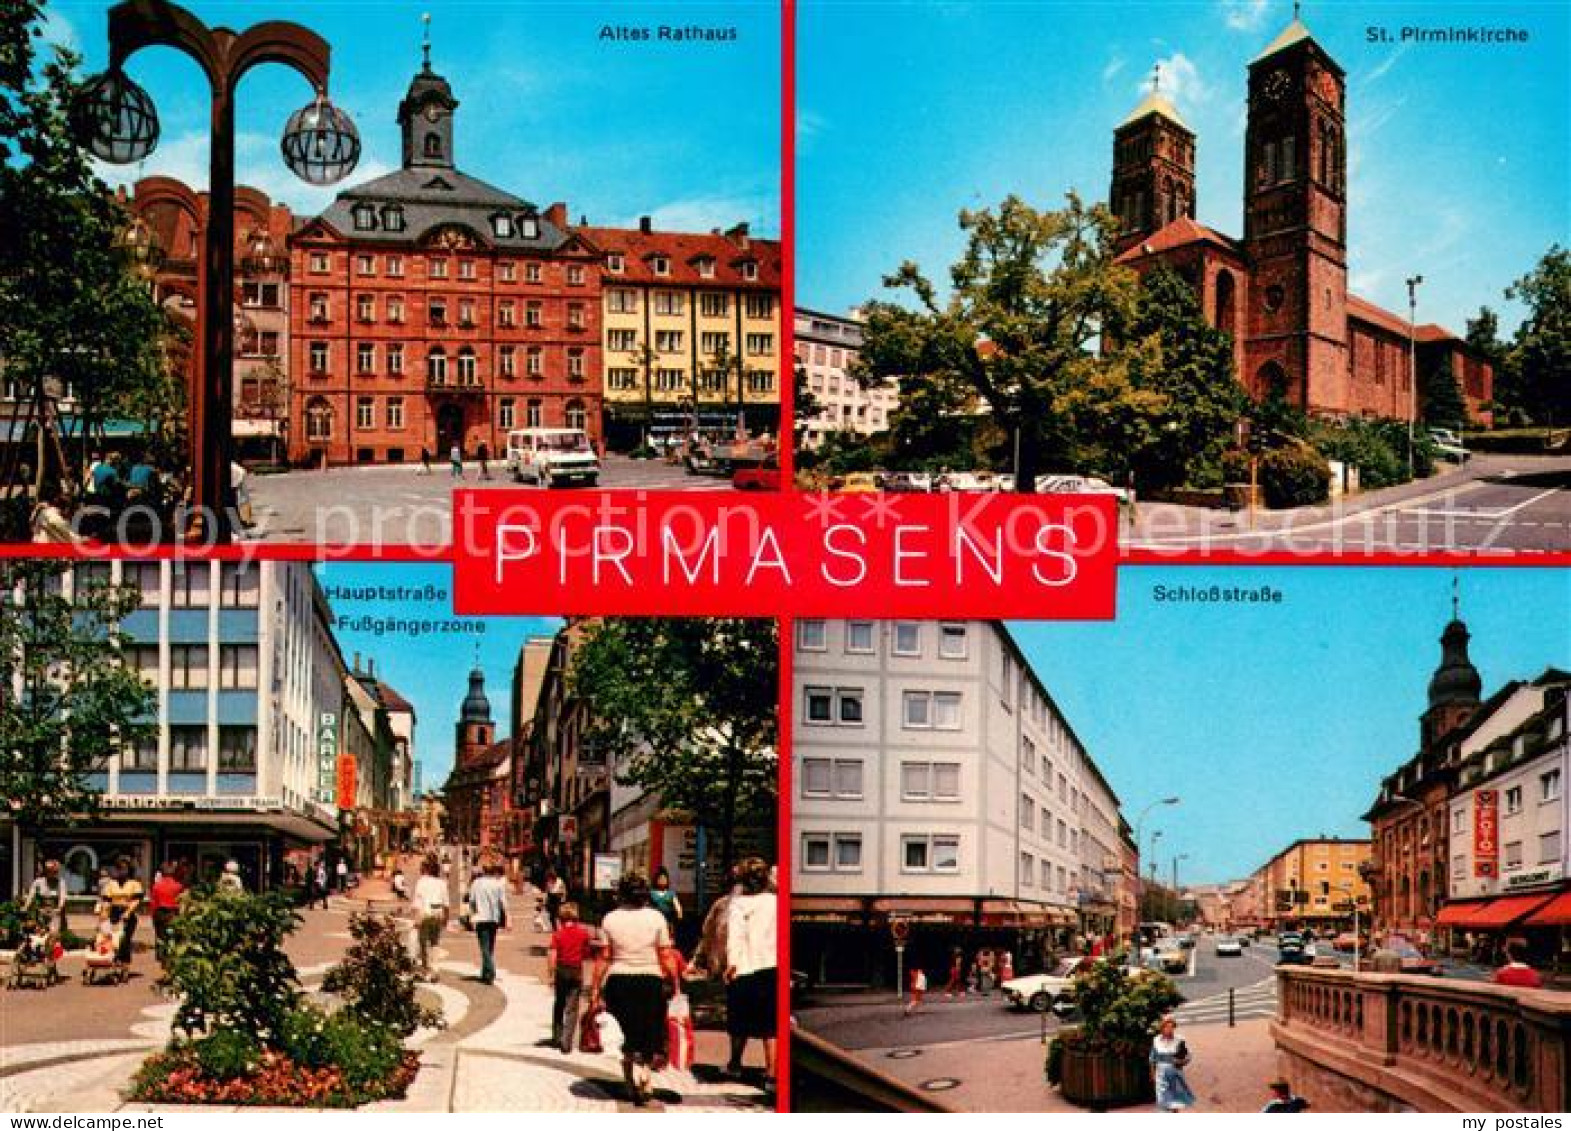 73615560 Pirmasens Altes Rathaus St Pirminkirche Hauptstrasse Schlossstrasse Pir - Pirmasens